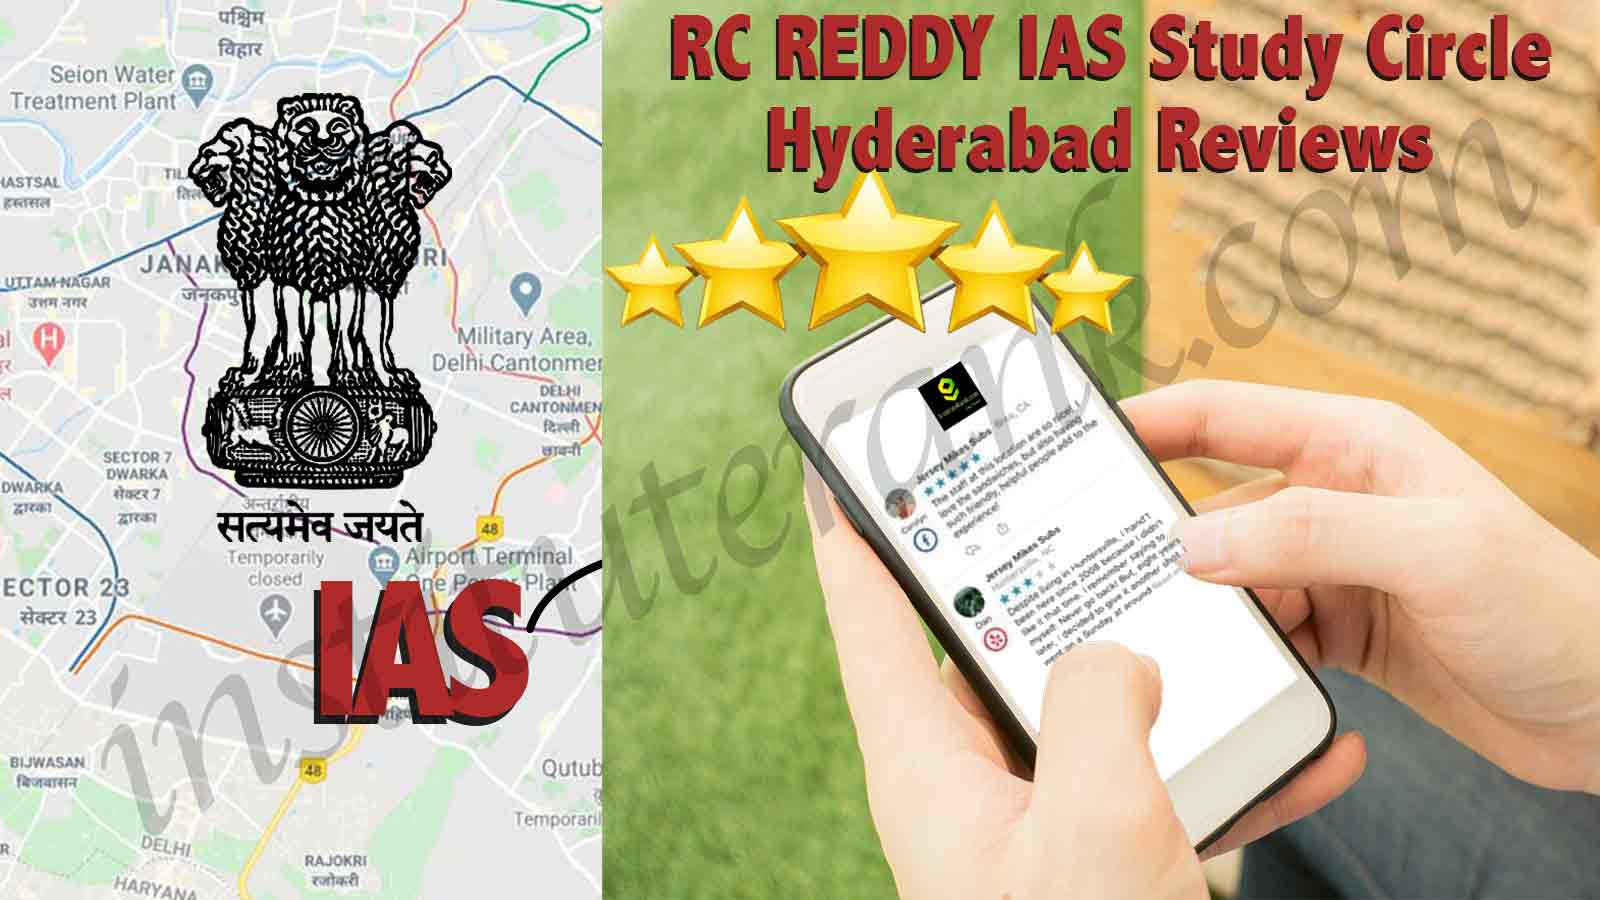 RC REDDY IAS Study Circle Hyderabad Reviews